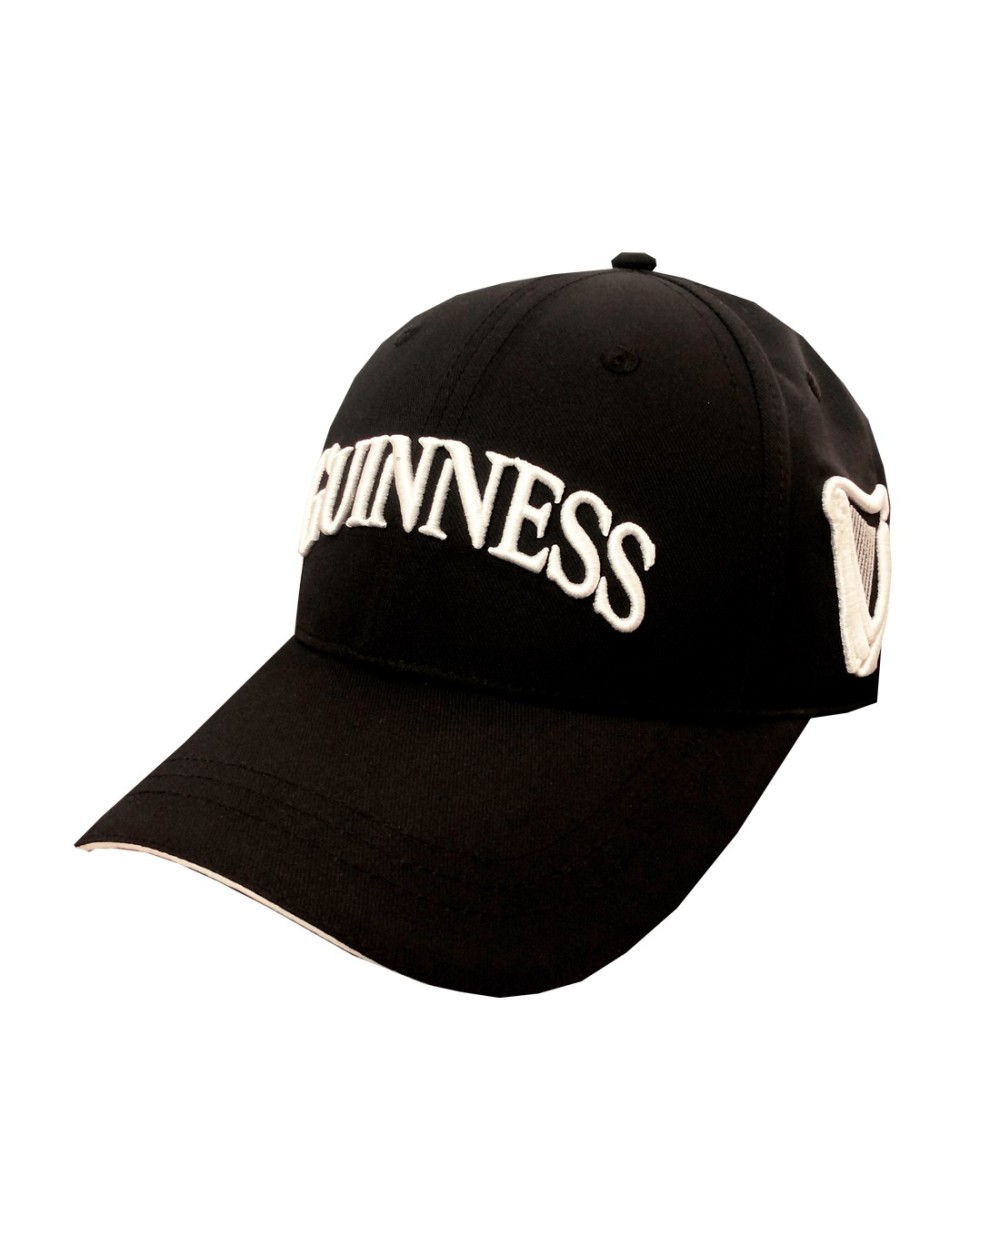 Guinness Embroidered Baseball Cap in Black